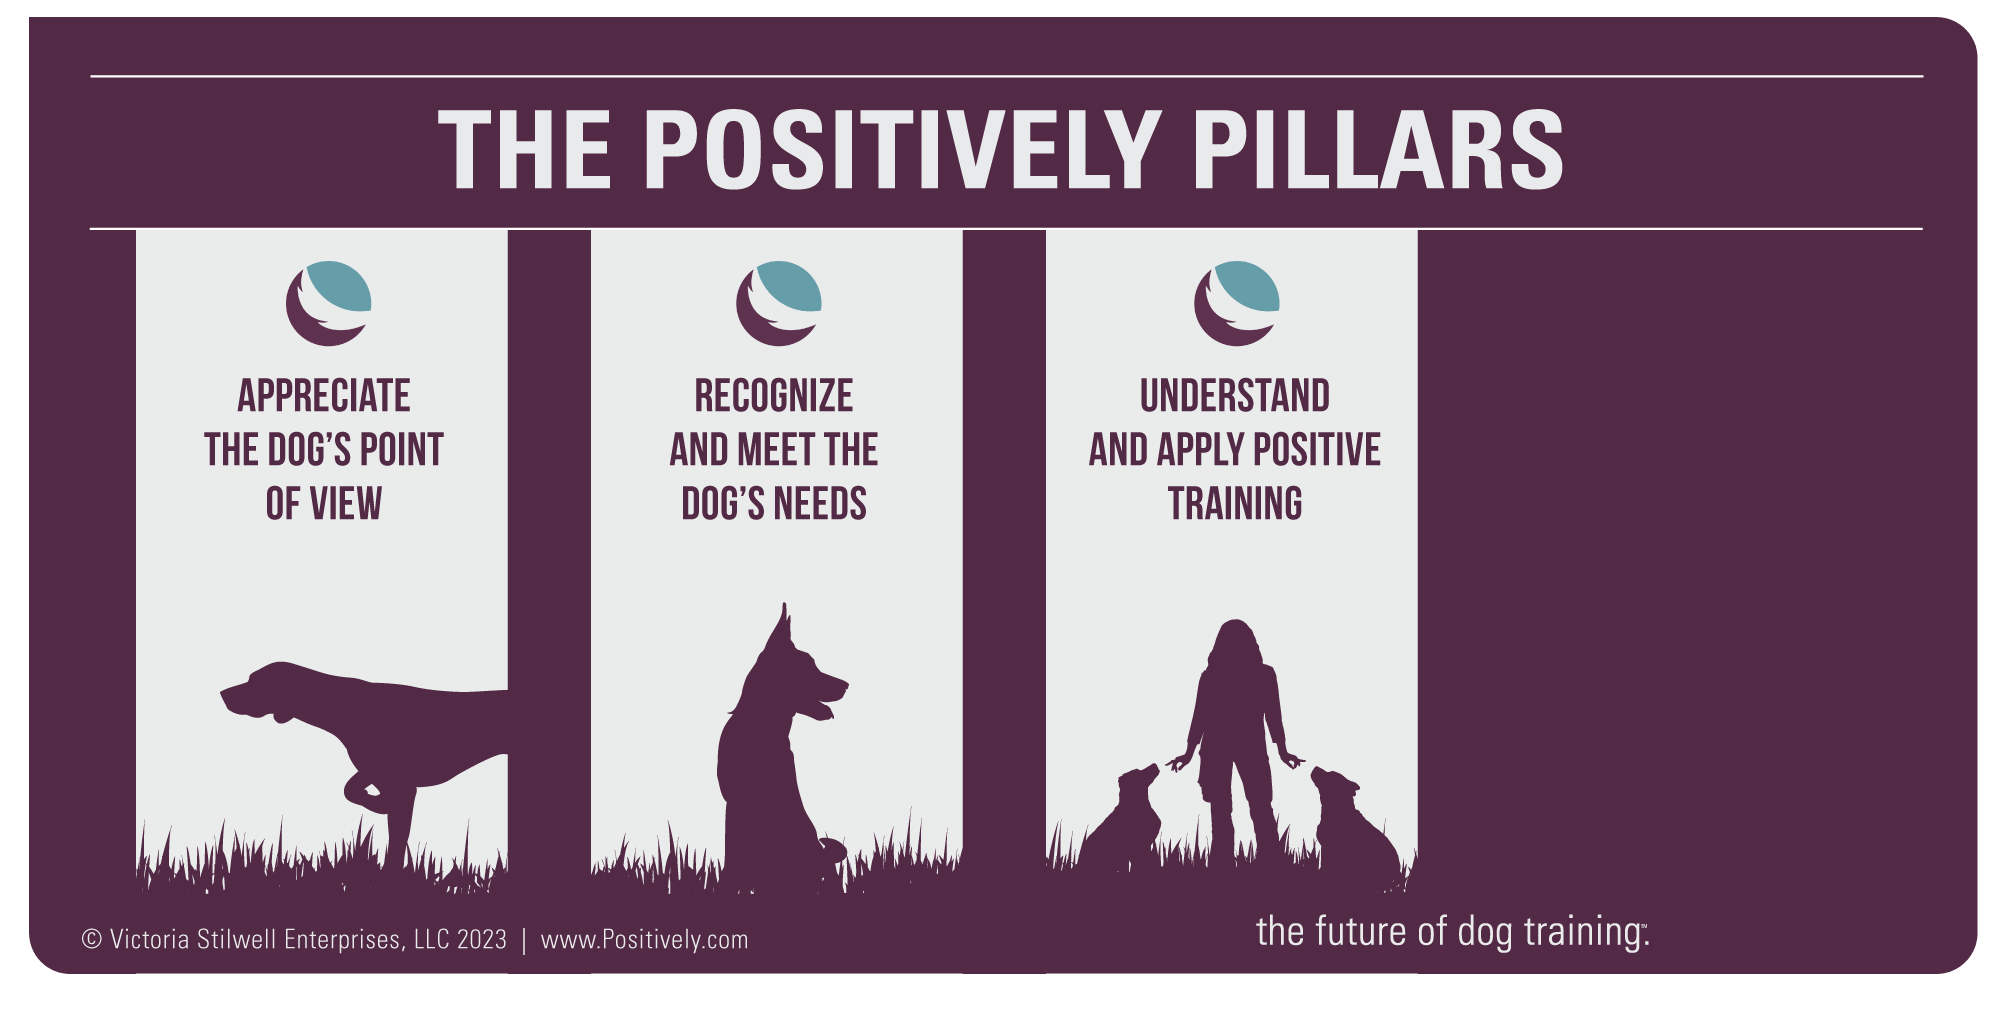 Positively Pillar #3